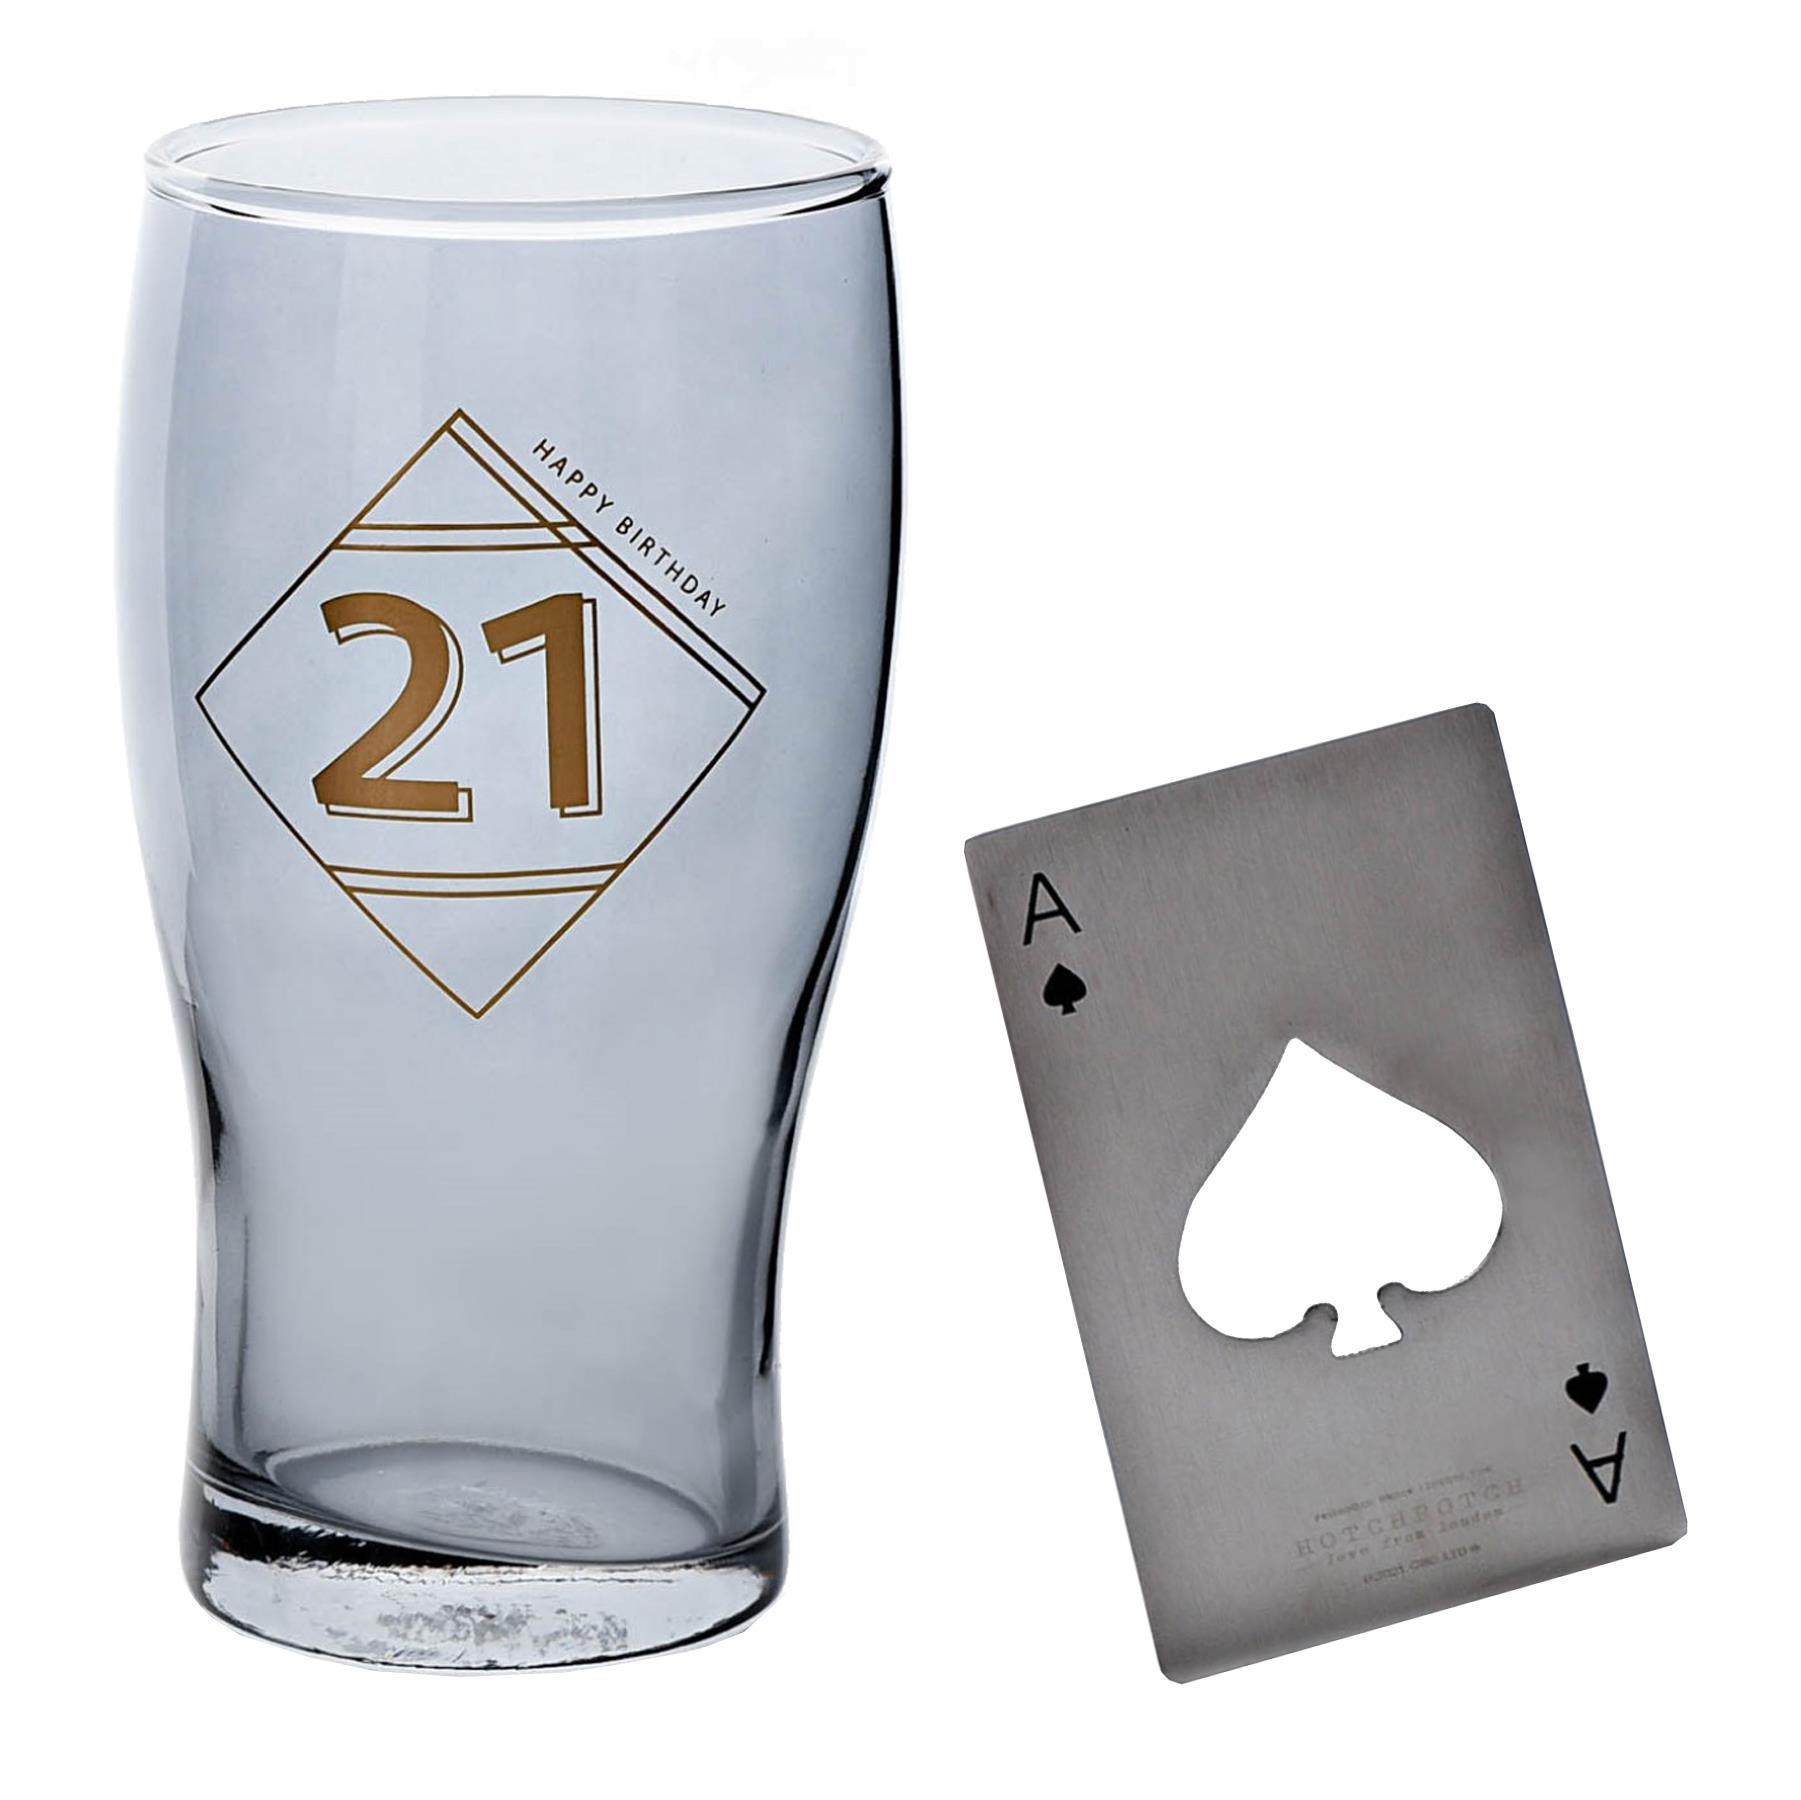 Pint Beer Glass and Bottle Opener Set - Birthday - 21st